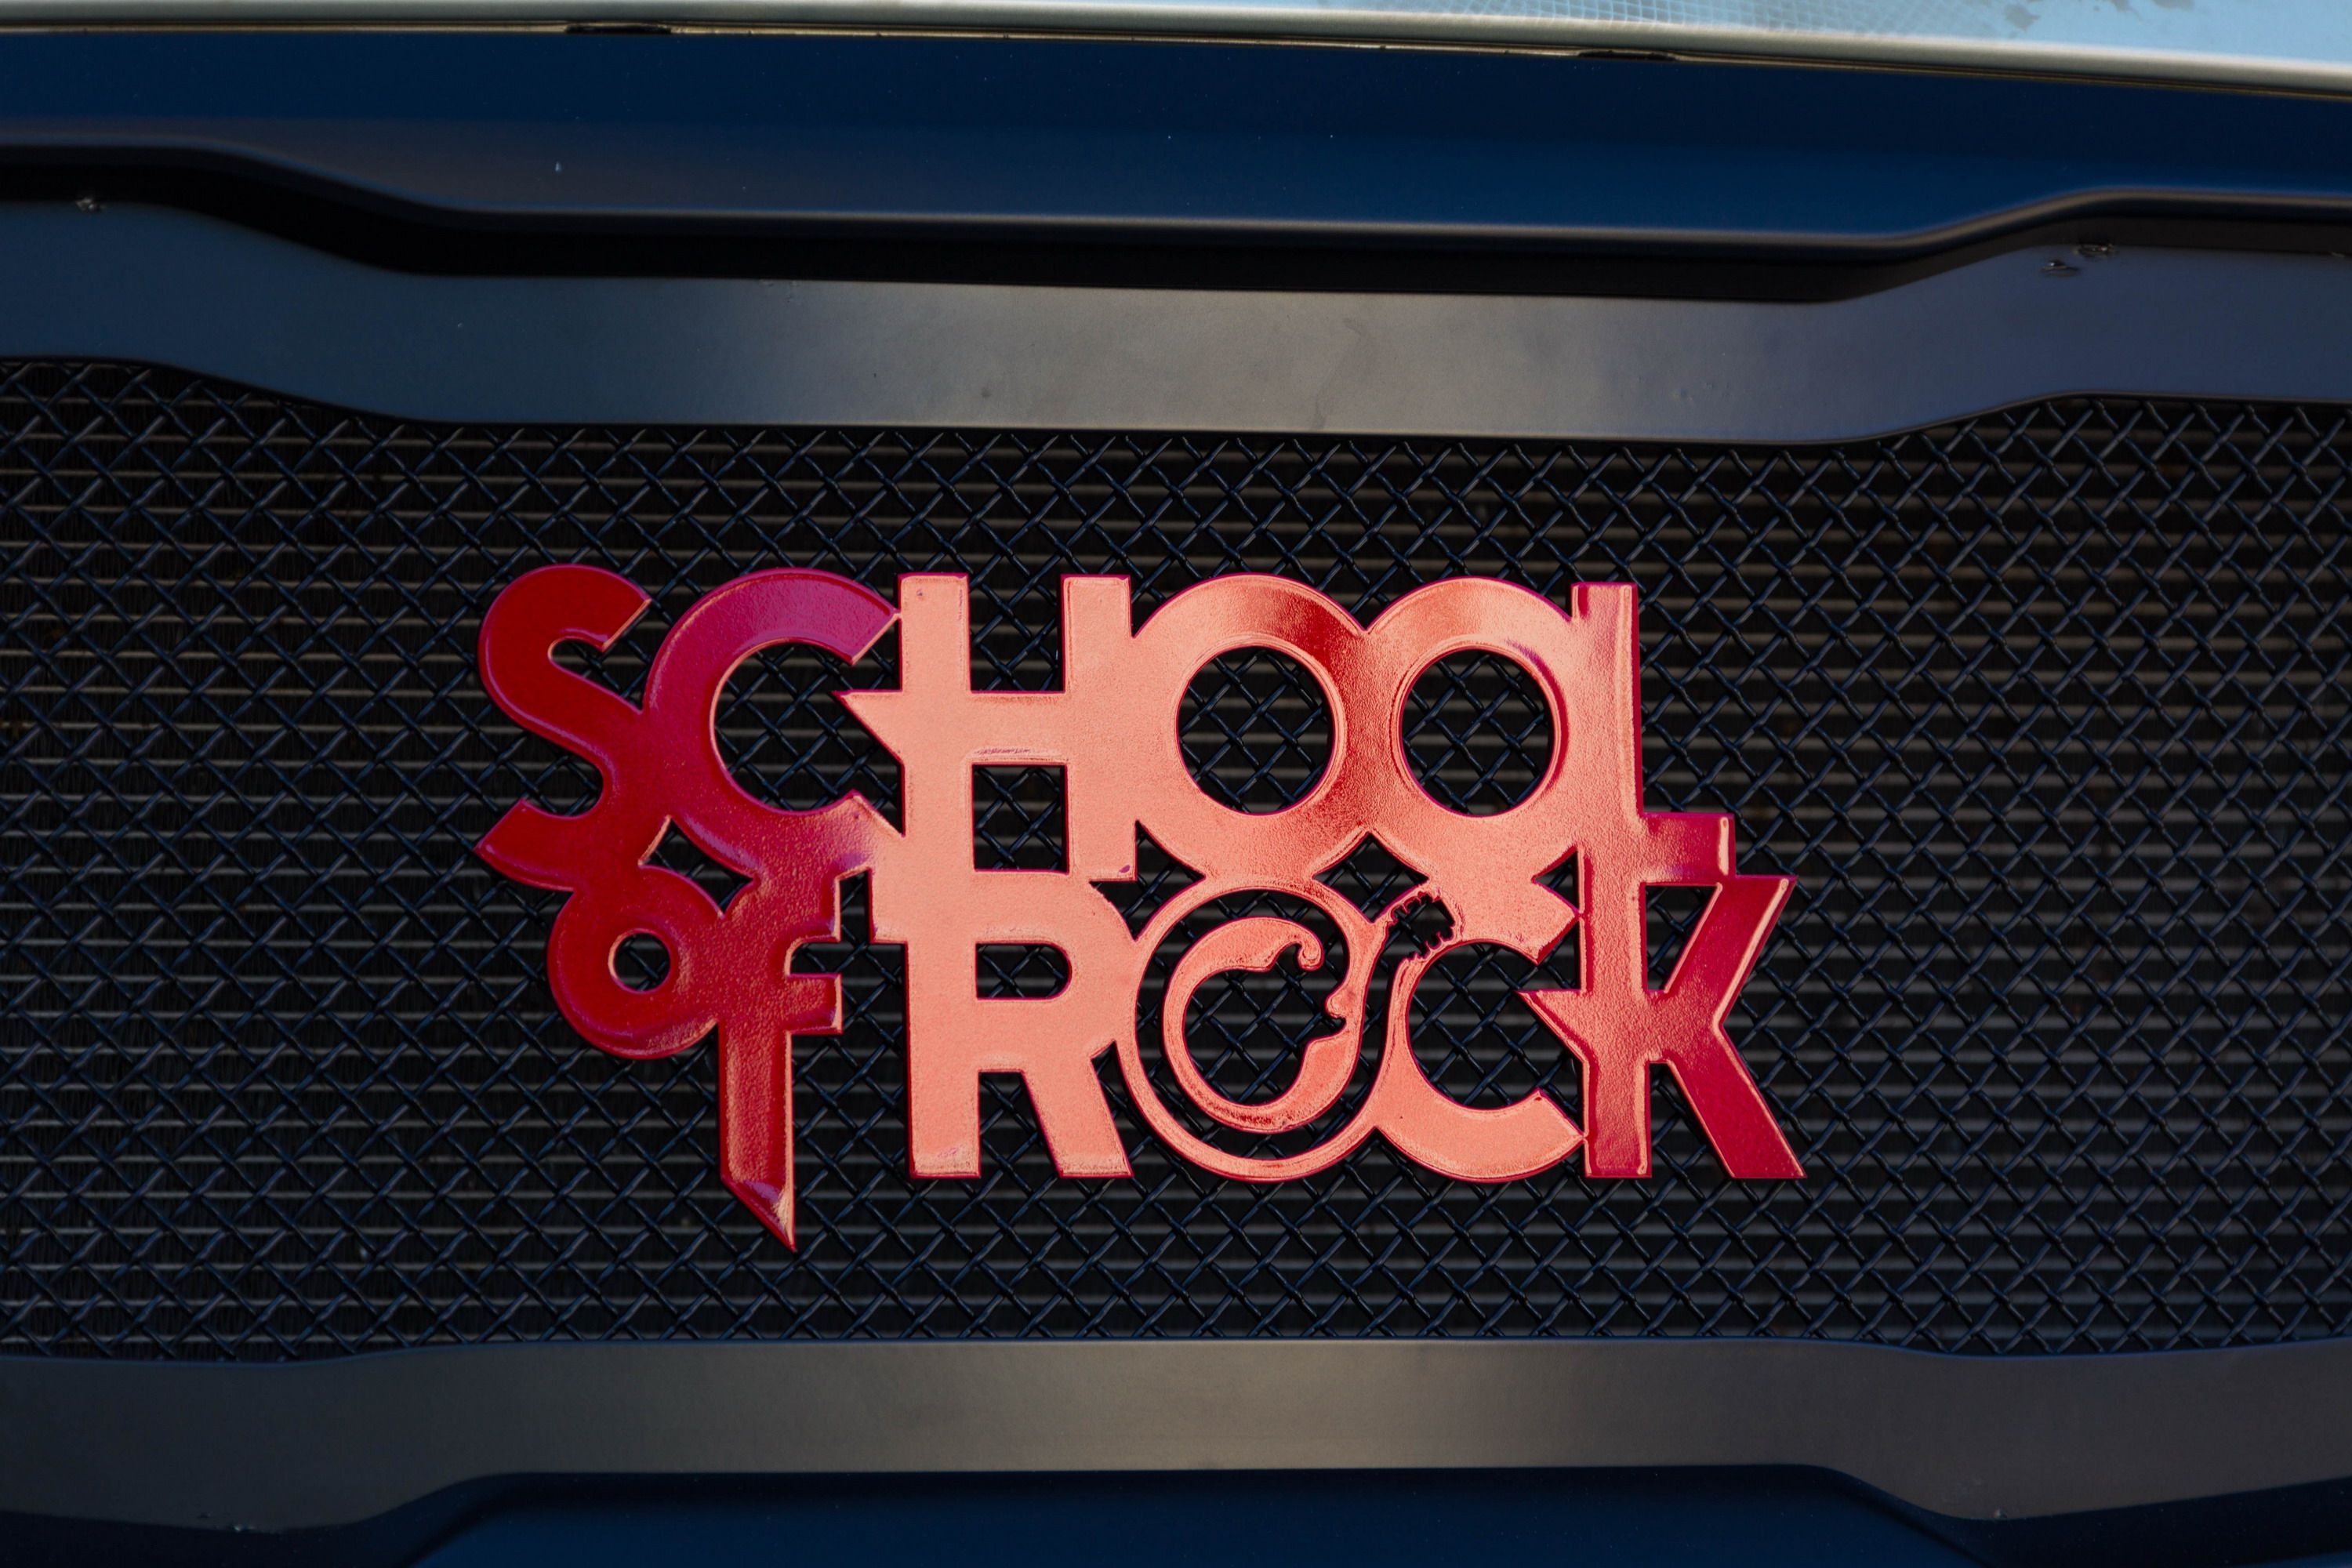 2016 Kia Sedona School of Rock